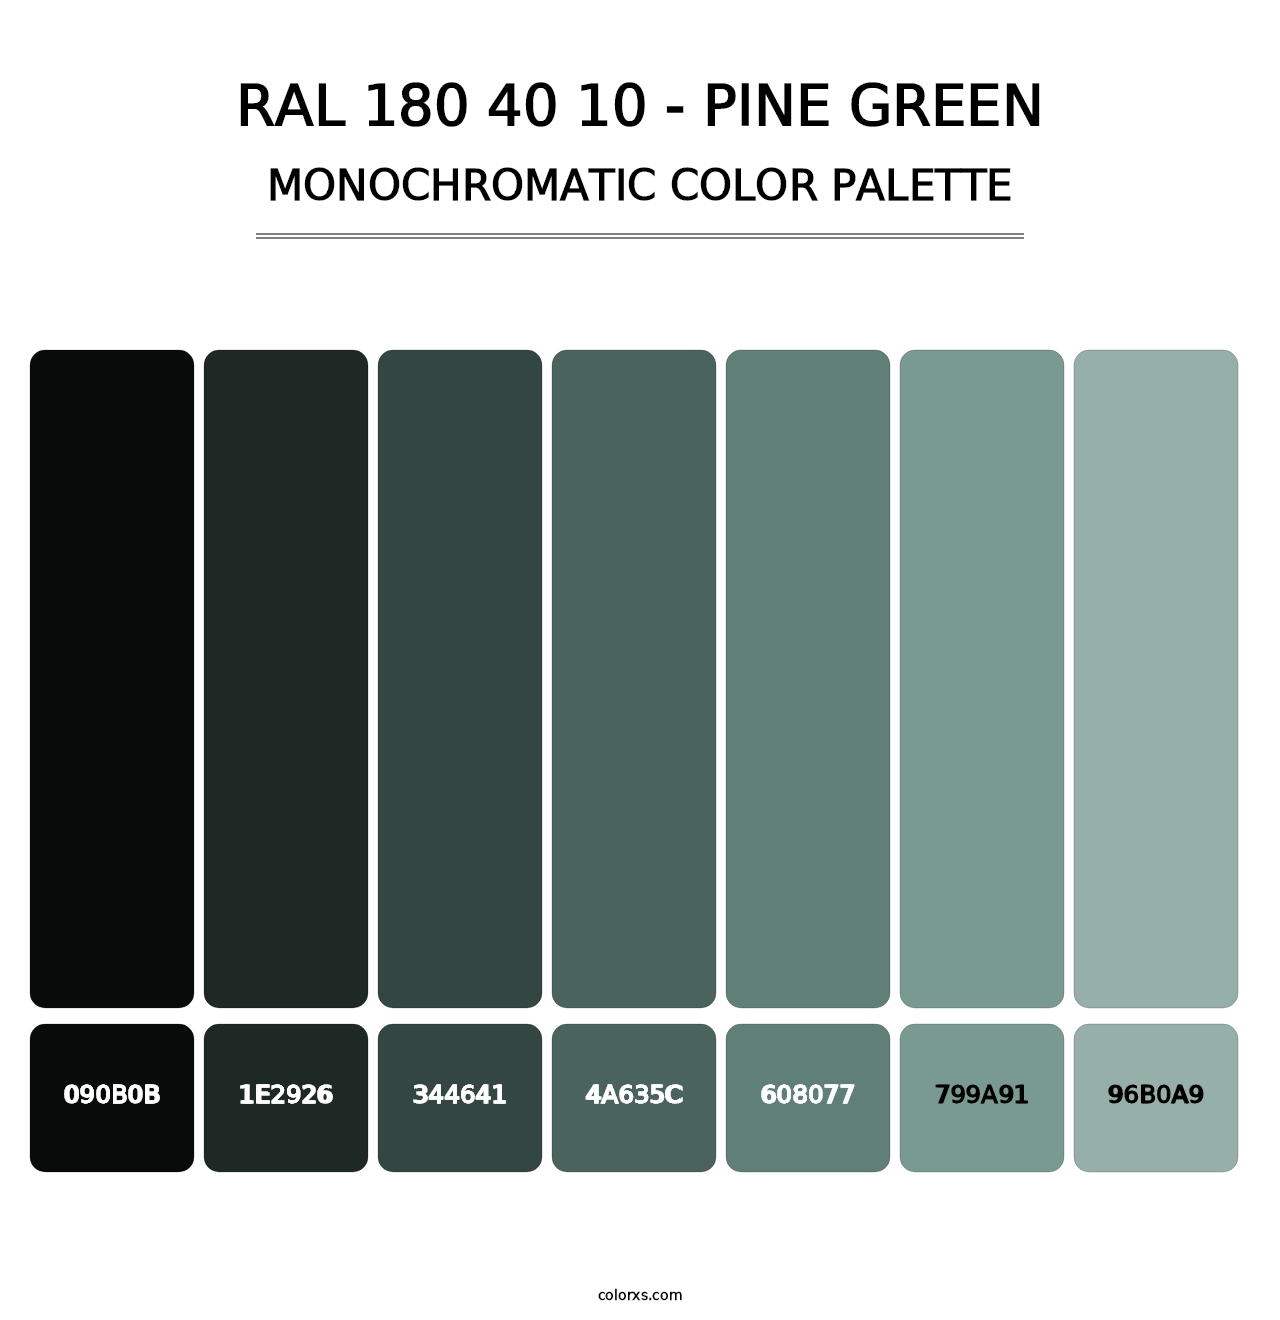 RAL 180 40 10 - Pine Green - Monochromatic Color Palette